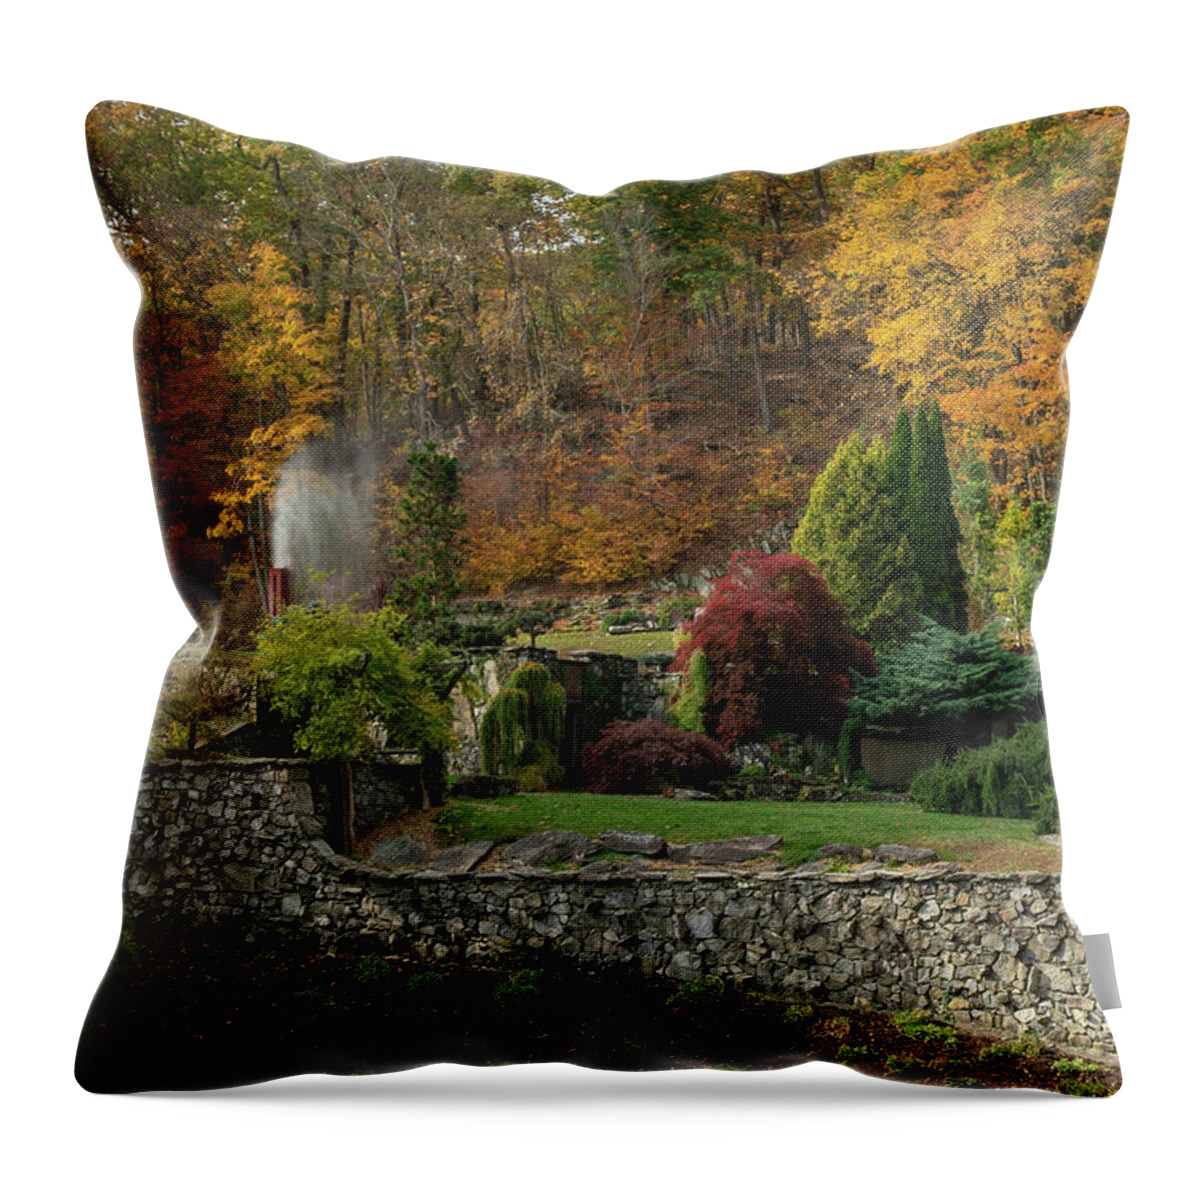 Autumn Throw Pillow featuring the photograph Autumn on the Mountainside by Sylvia Goldkranz